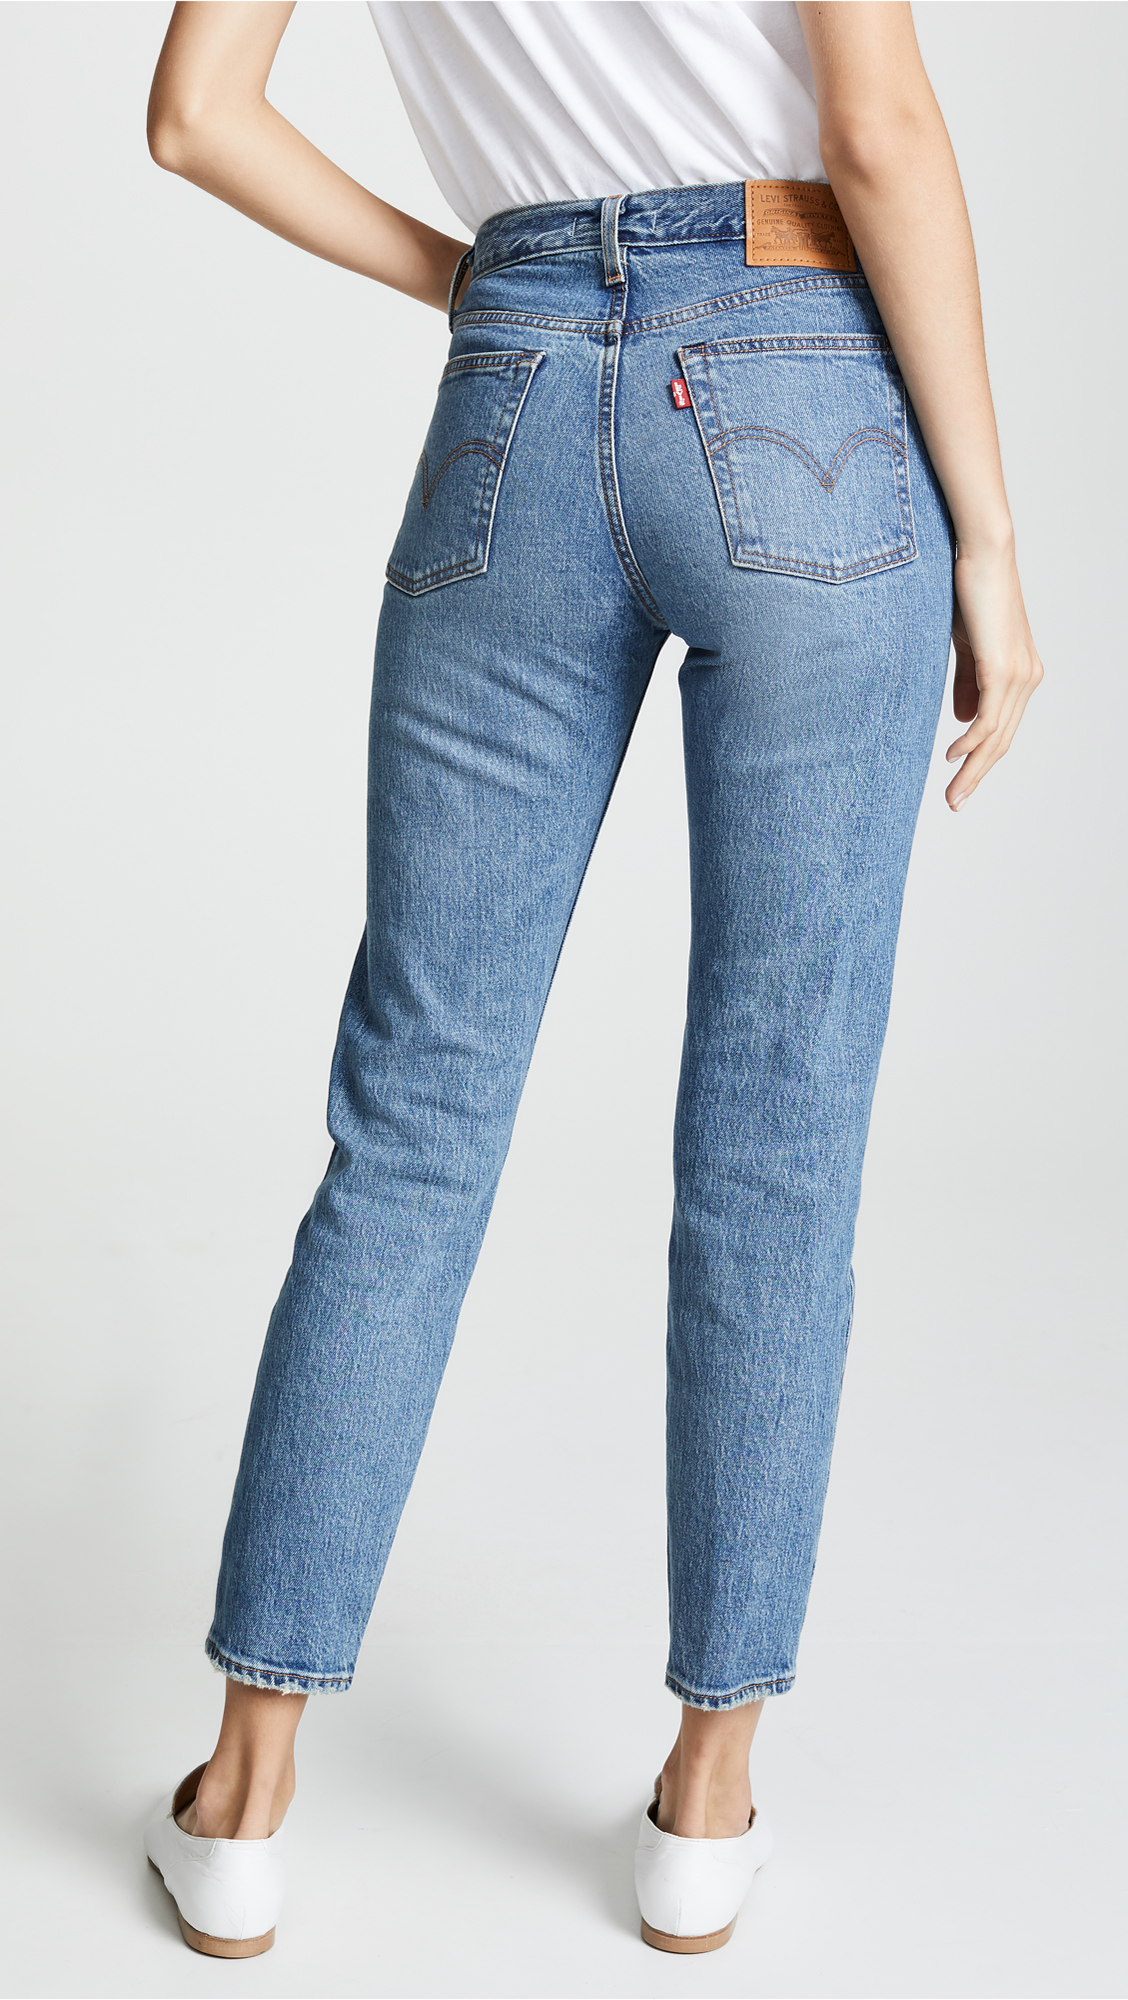 great butt jeans